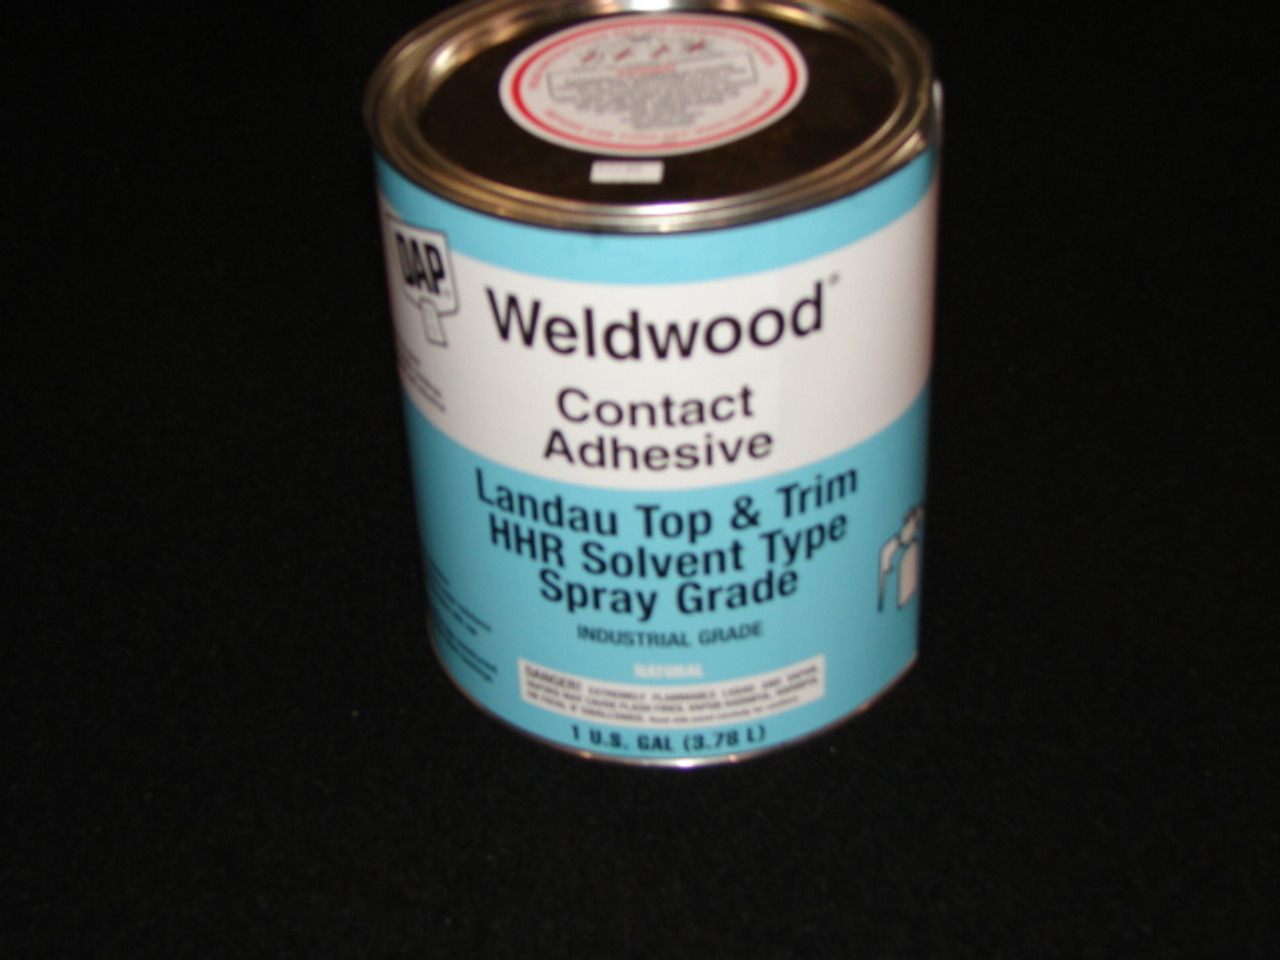 DAP Weldwood Contact Adhesive Top & Trim HHR Solvent Type Spray Grade 5  GALLON - GluePlace